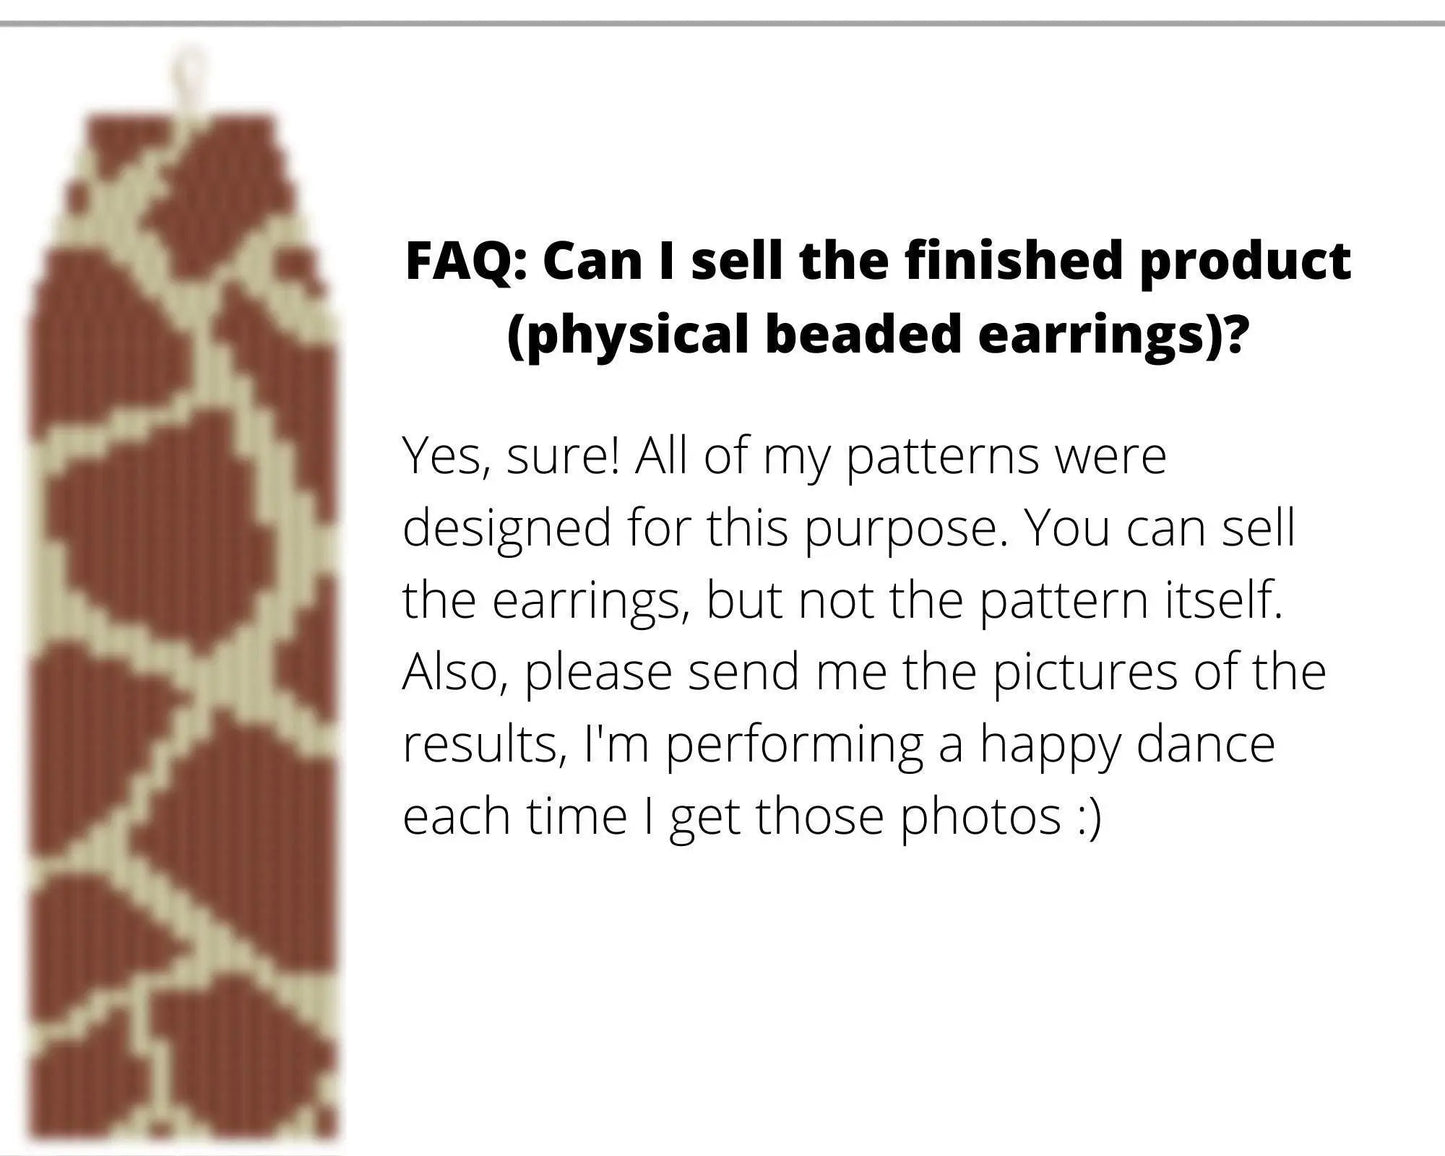 Set of 5 Animal Print Earrings Brick Stitch patterns for fringe beaded earrings - NikoBeadsUA